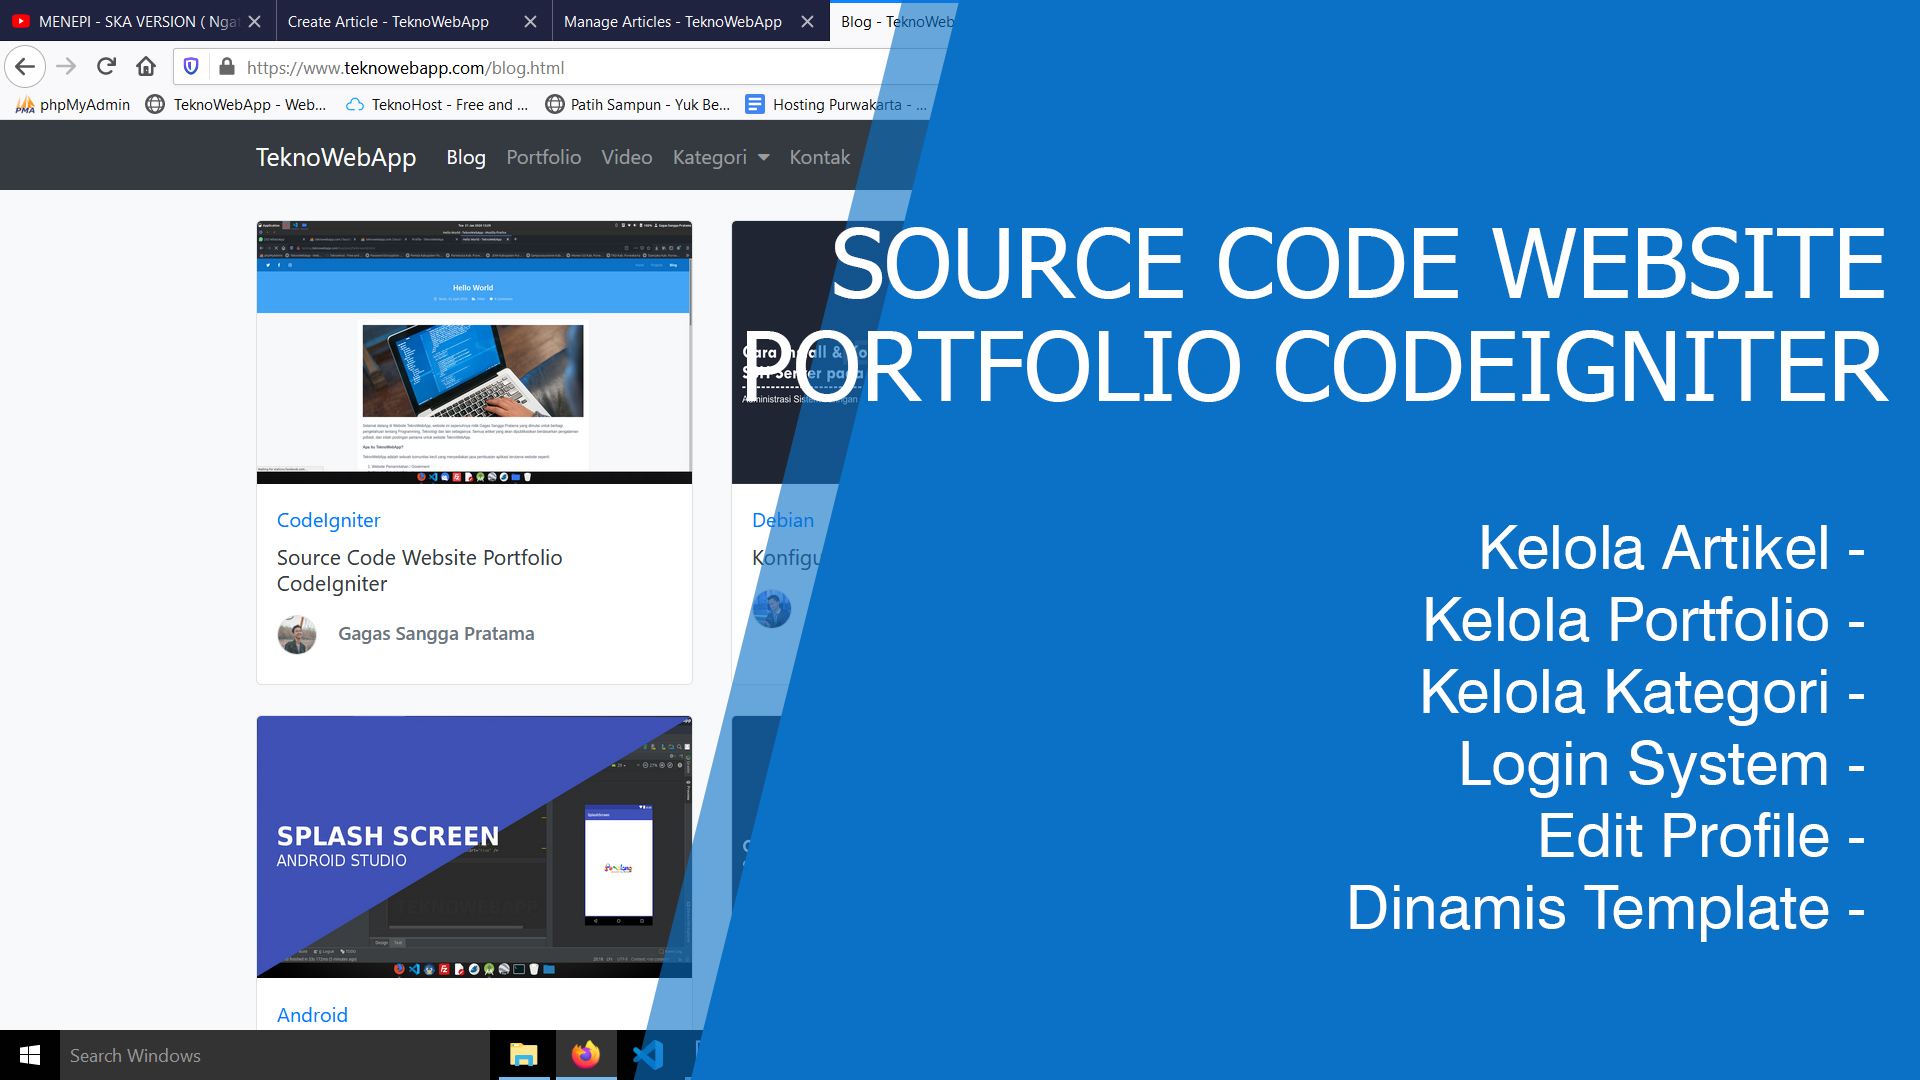 Source Code Website Portfolio CodeIgniter